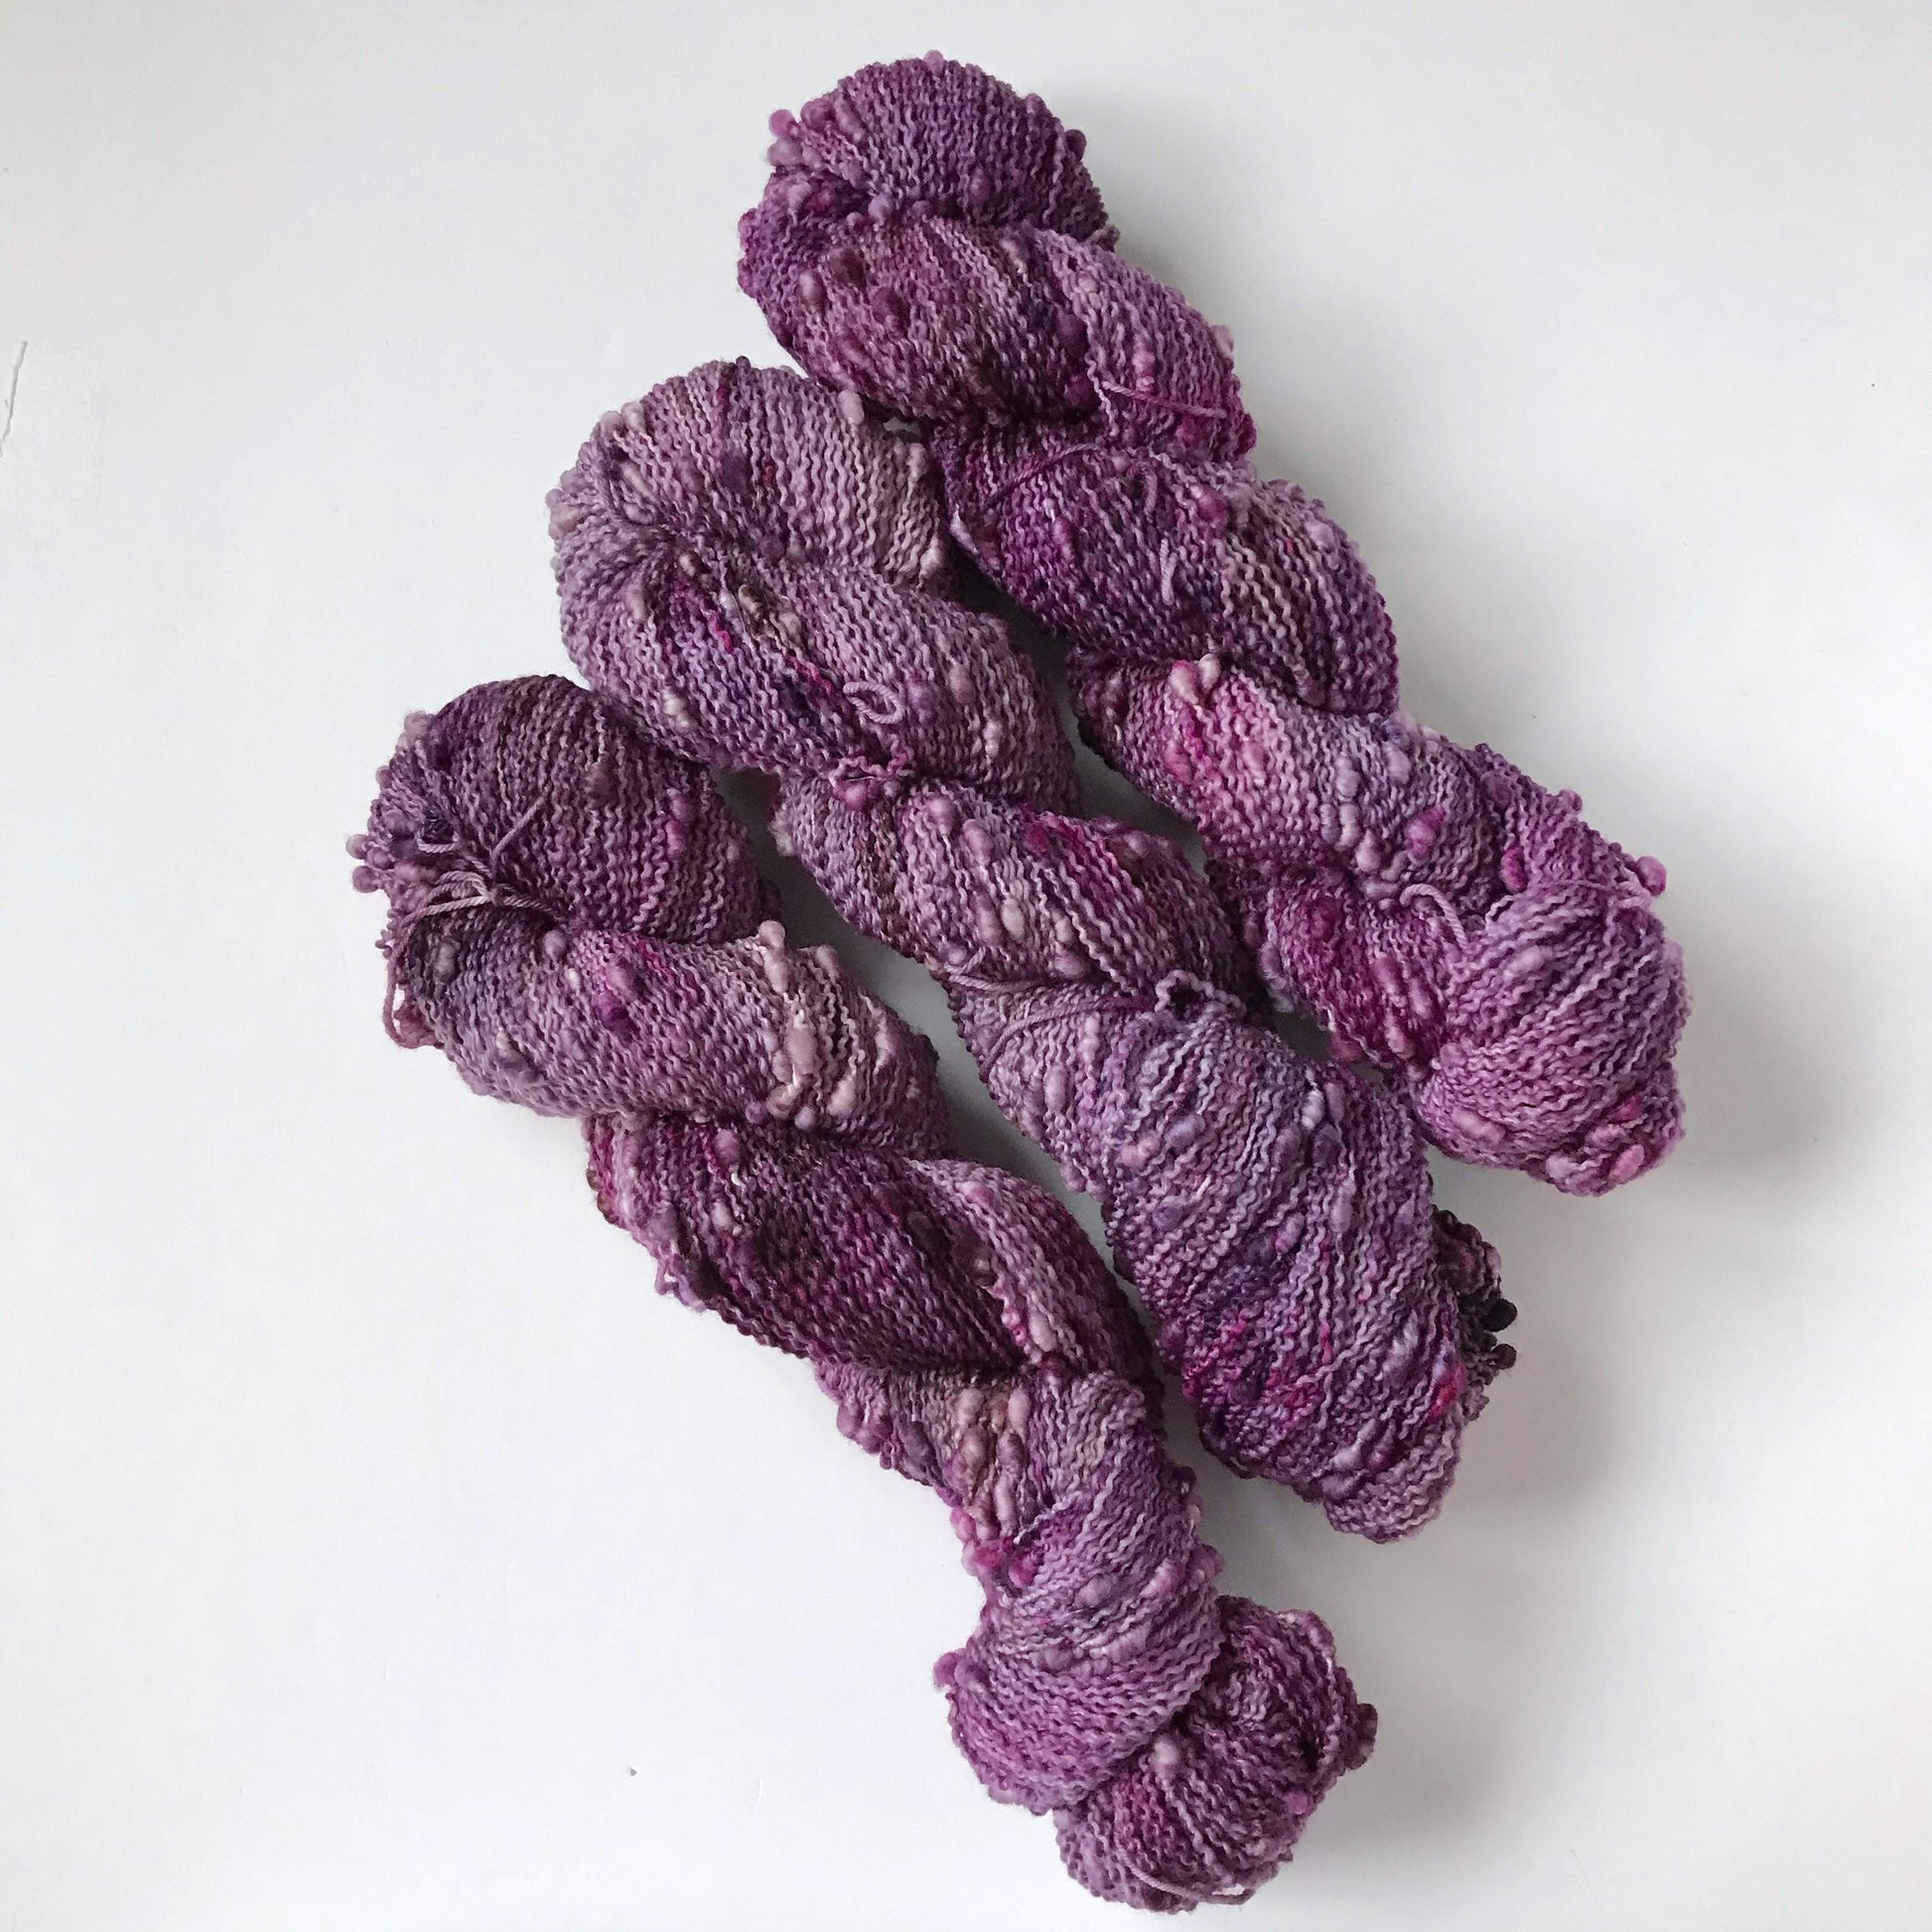 textured purple, burgundy and black fingering weight yarn